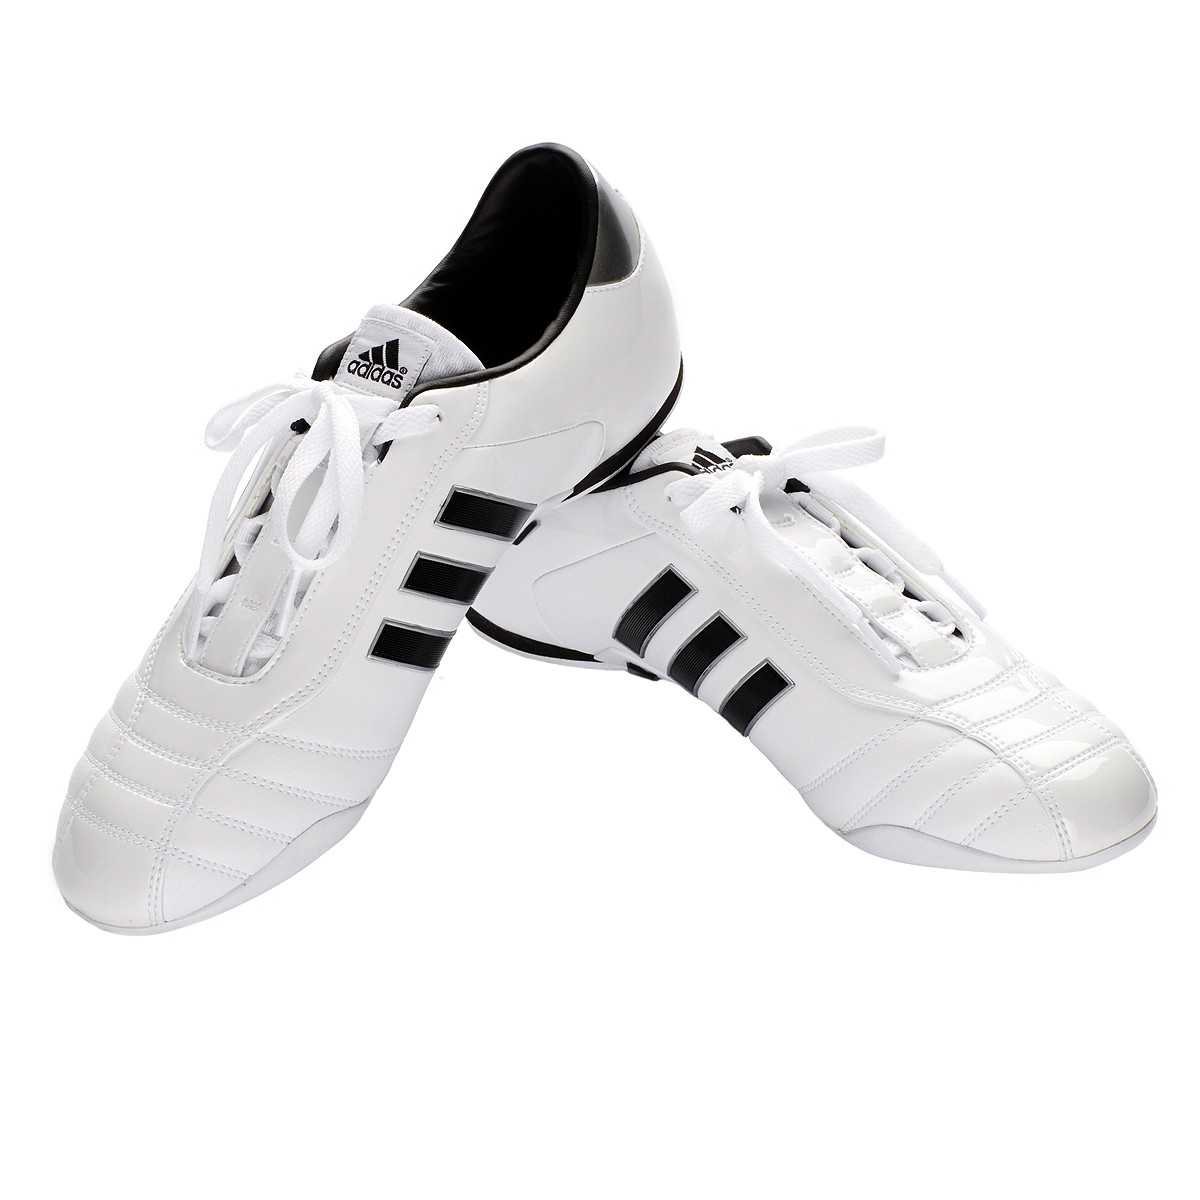 adidas star martial arts shoes